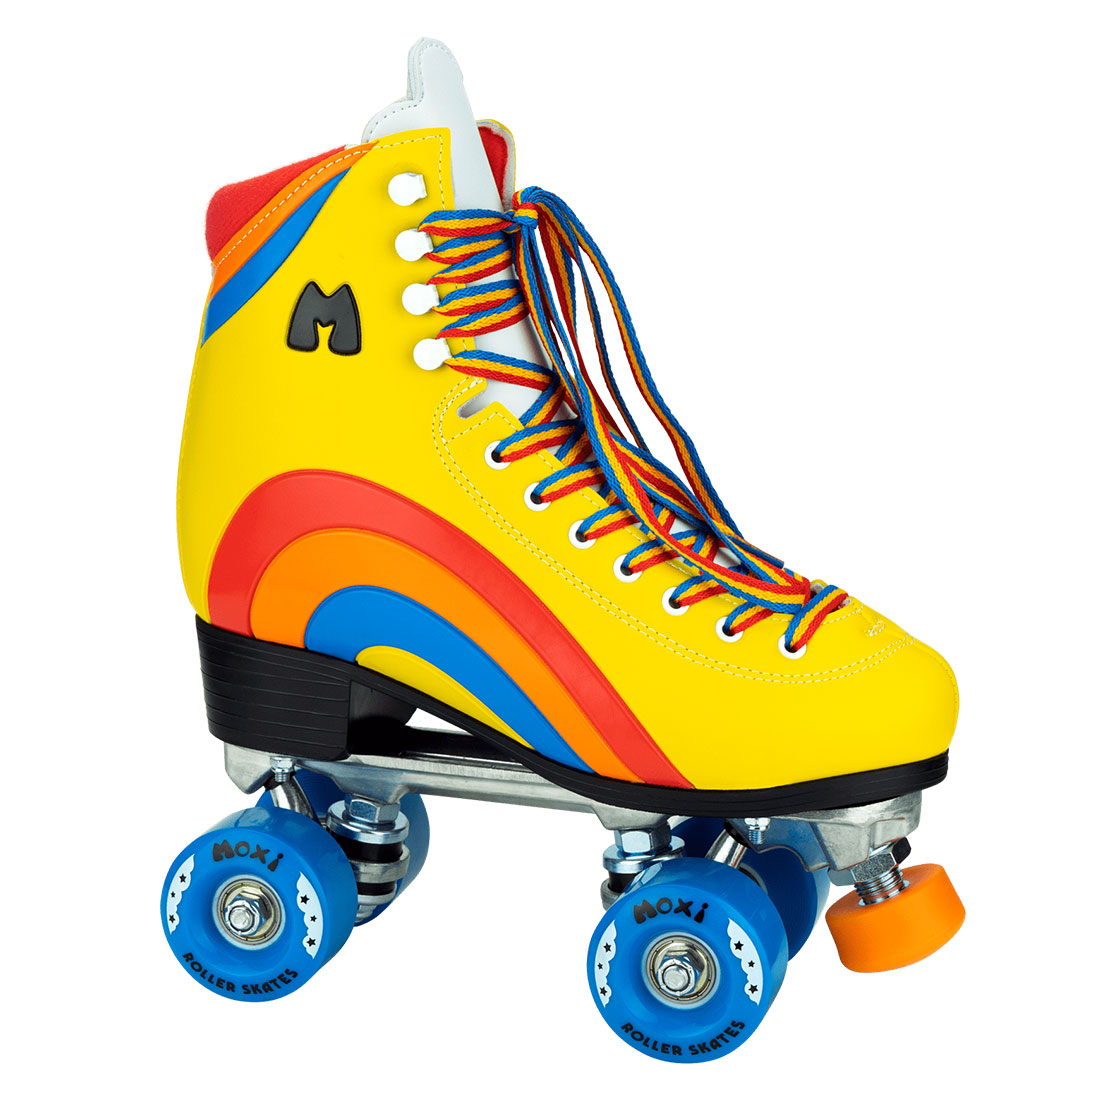 Moxi Rainbow Rider - Sunshine Yellow Roller Skates